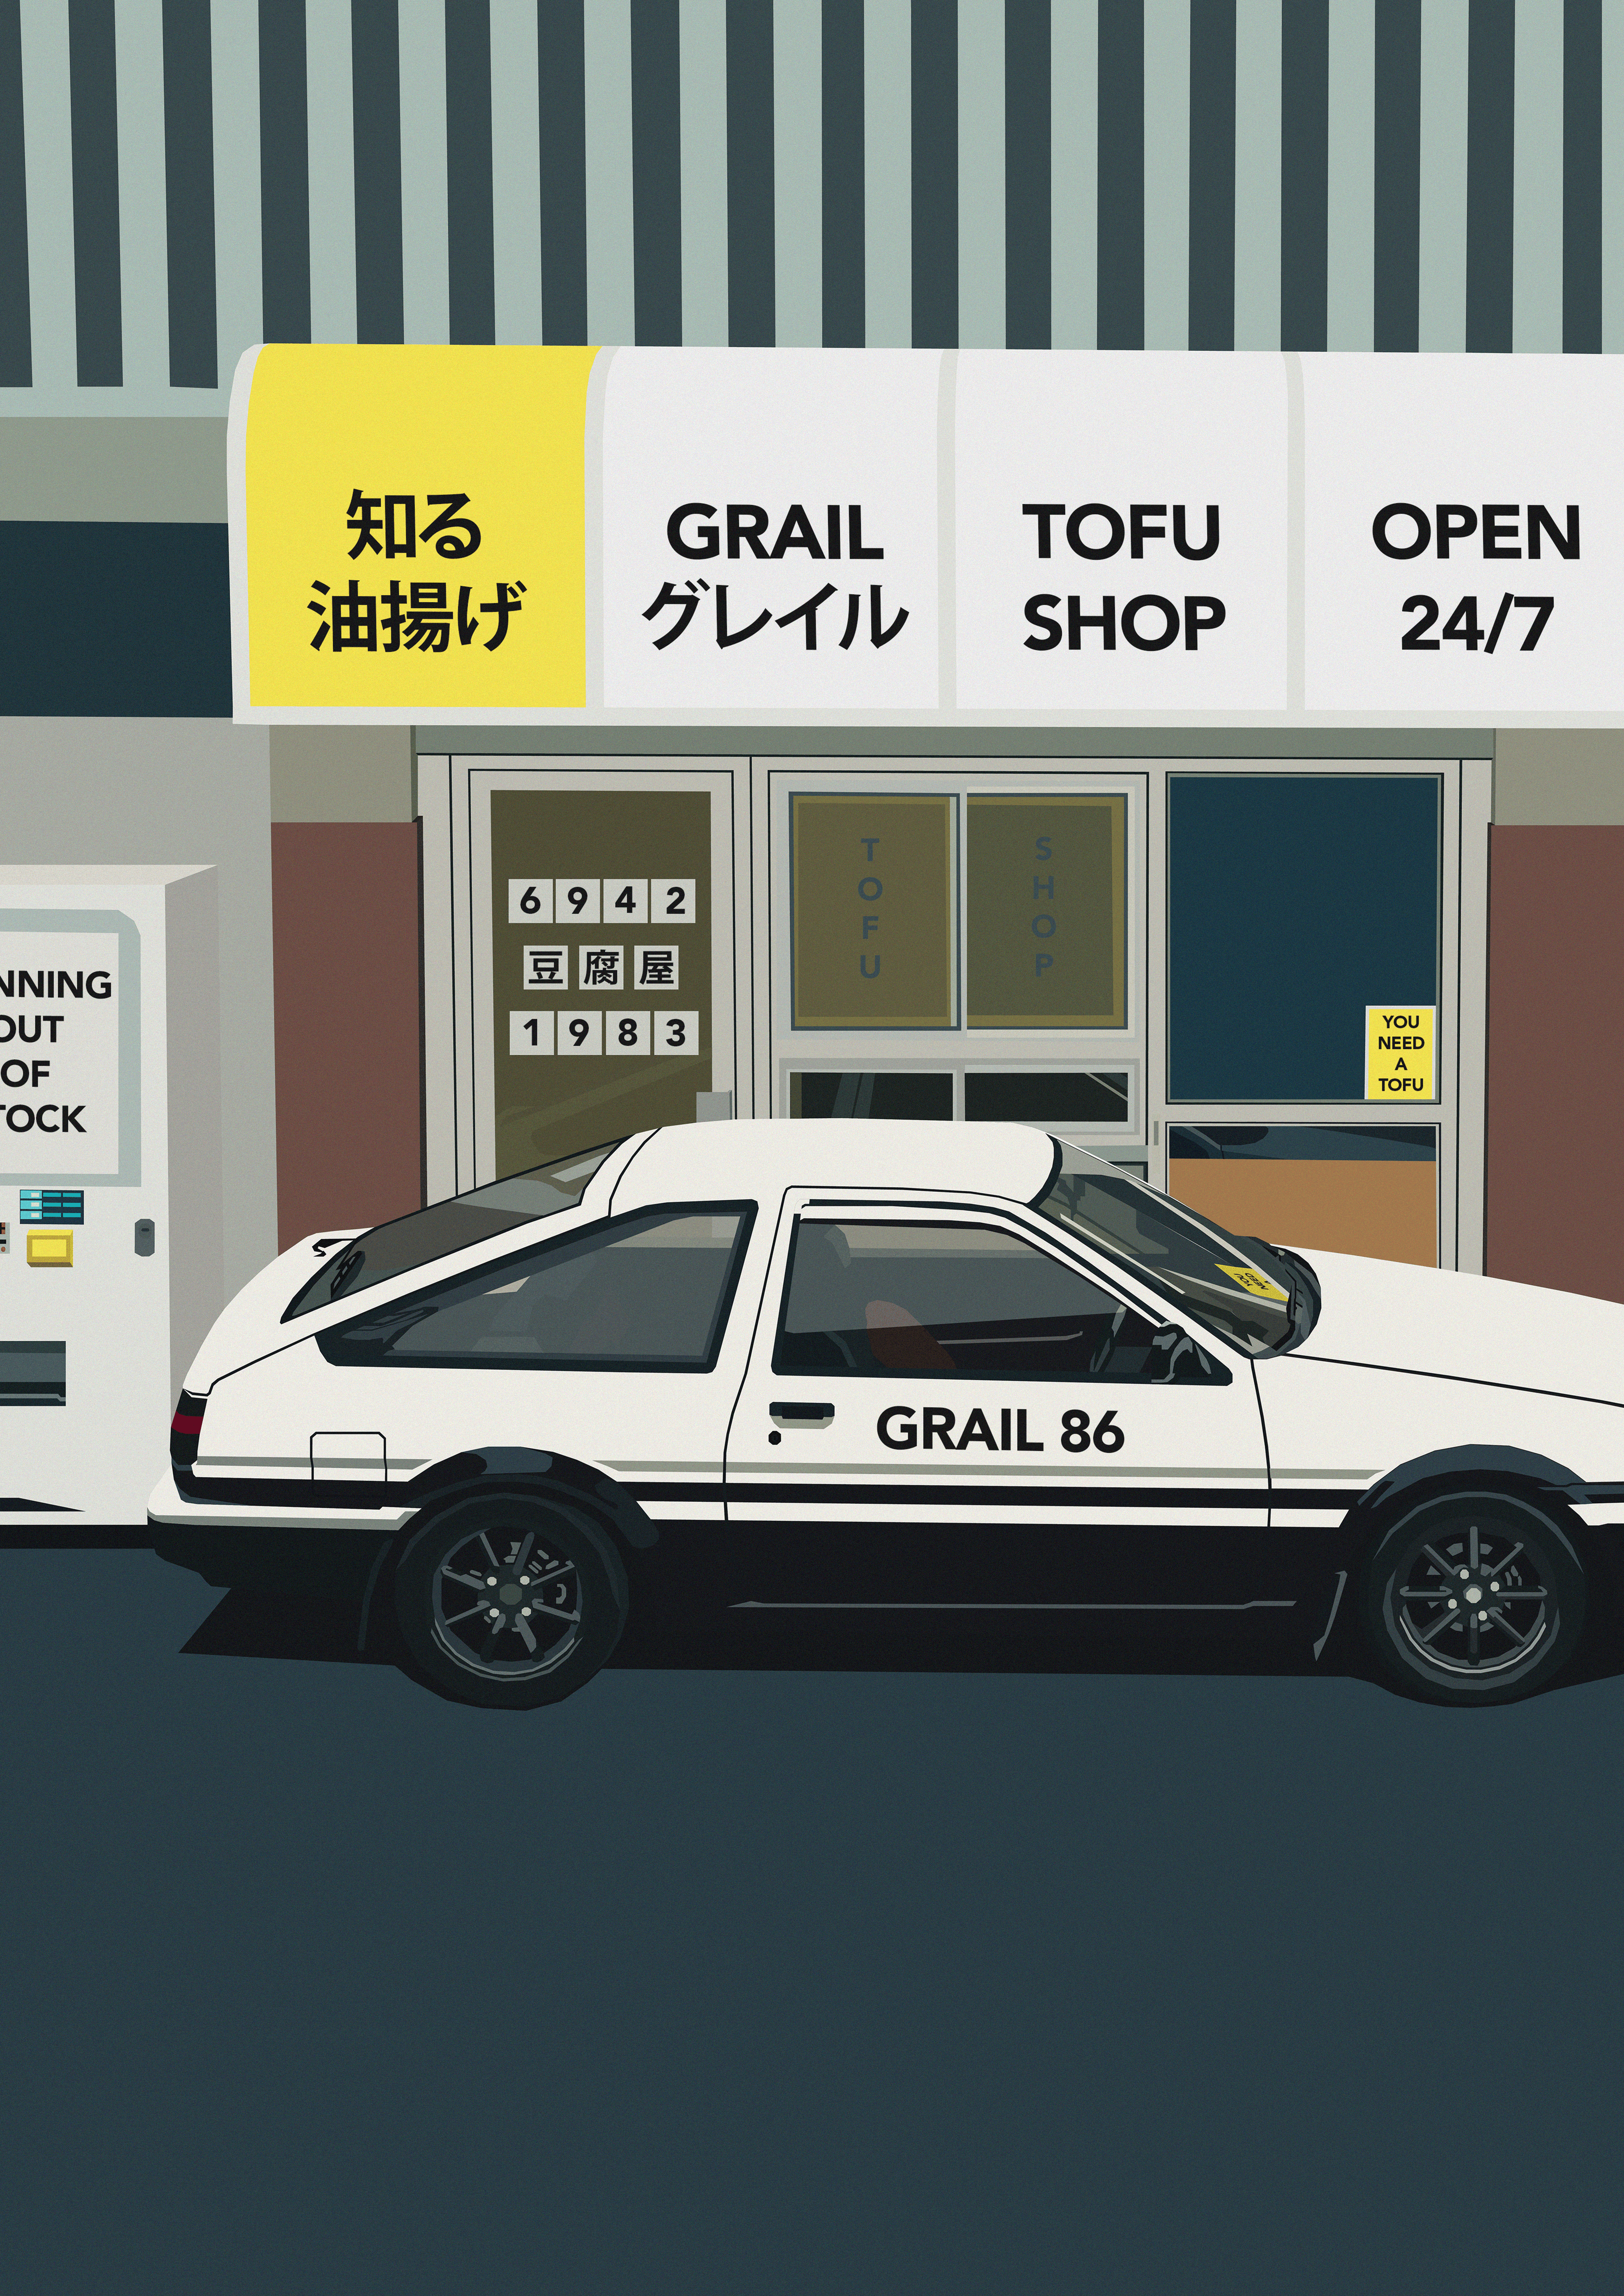 Grail Tofu Shop